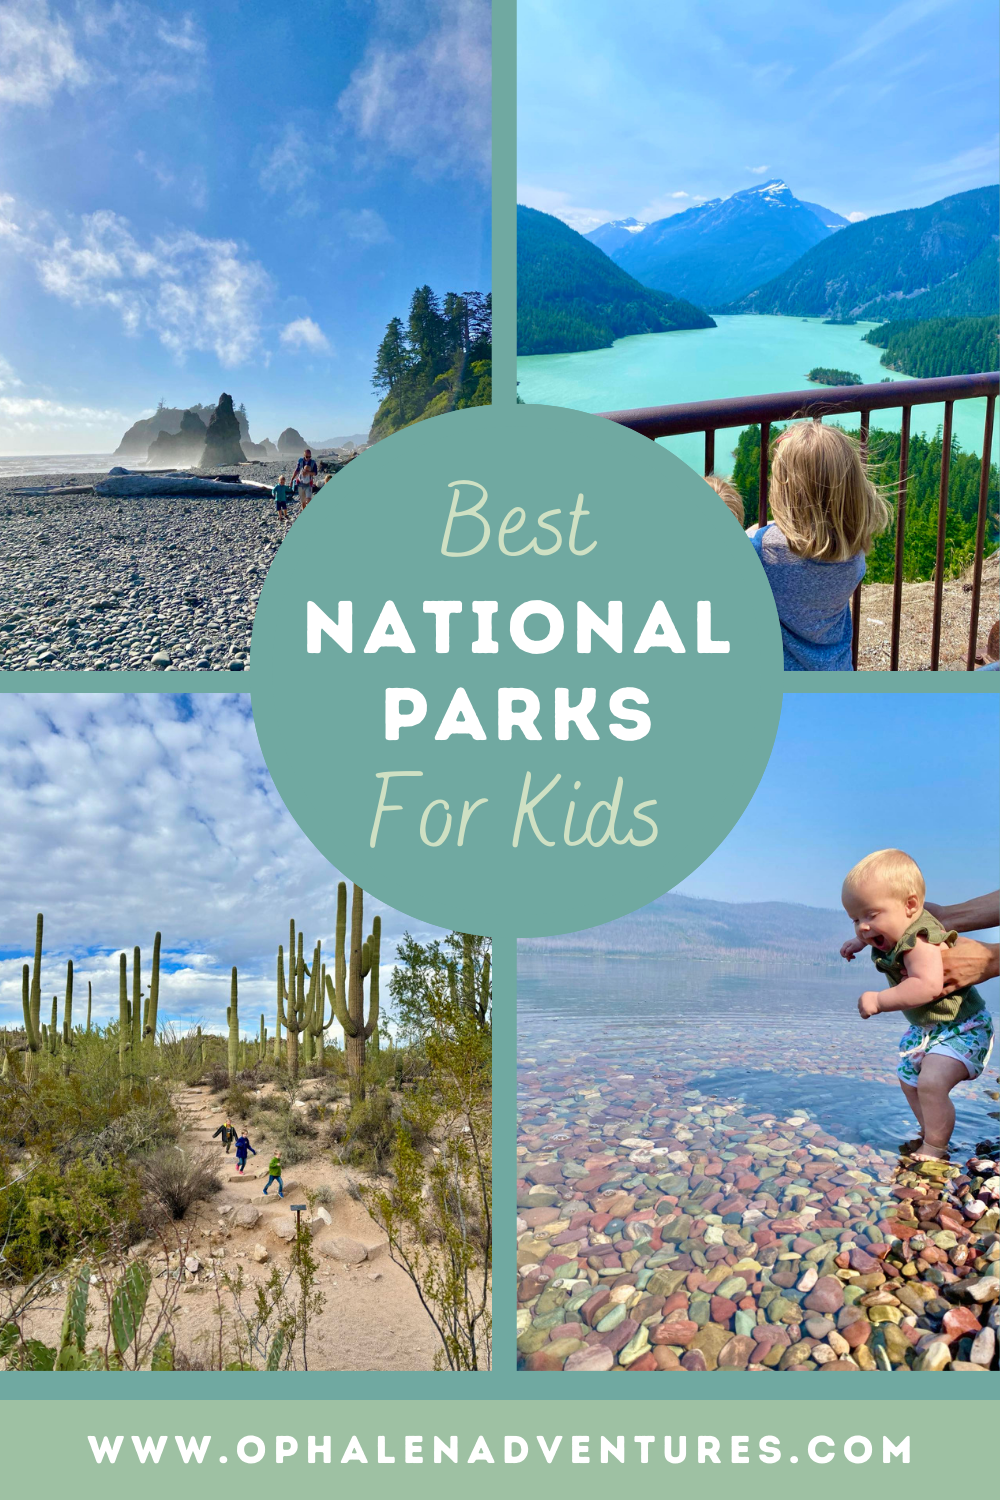 Best National Parks for Kids: Travel Families’ Insider Picks